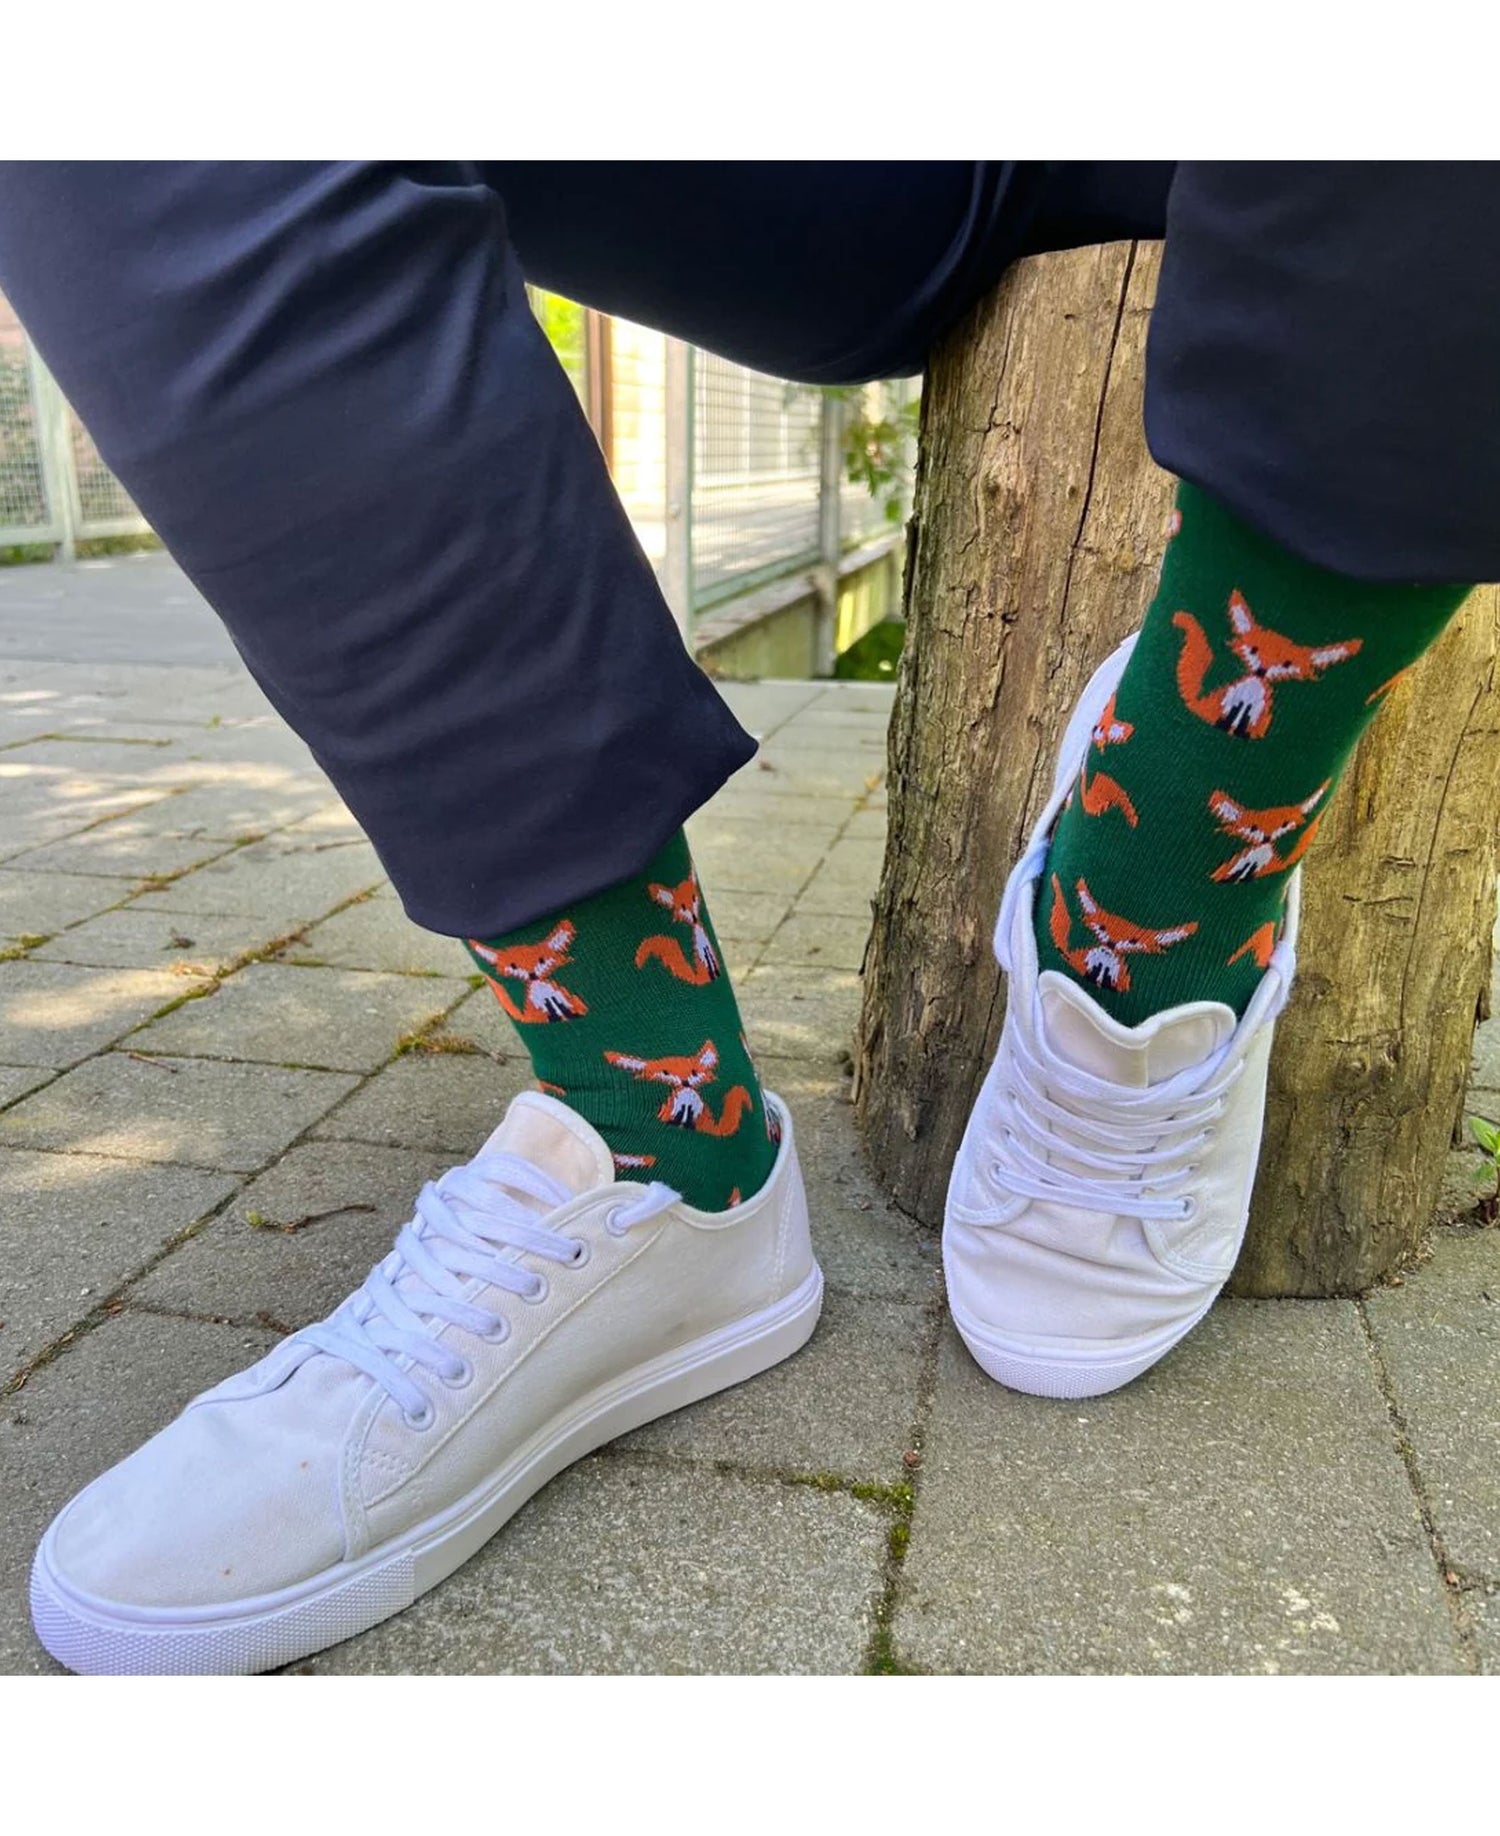 Patterned Socks - Mr Fox